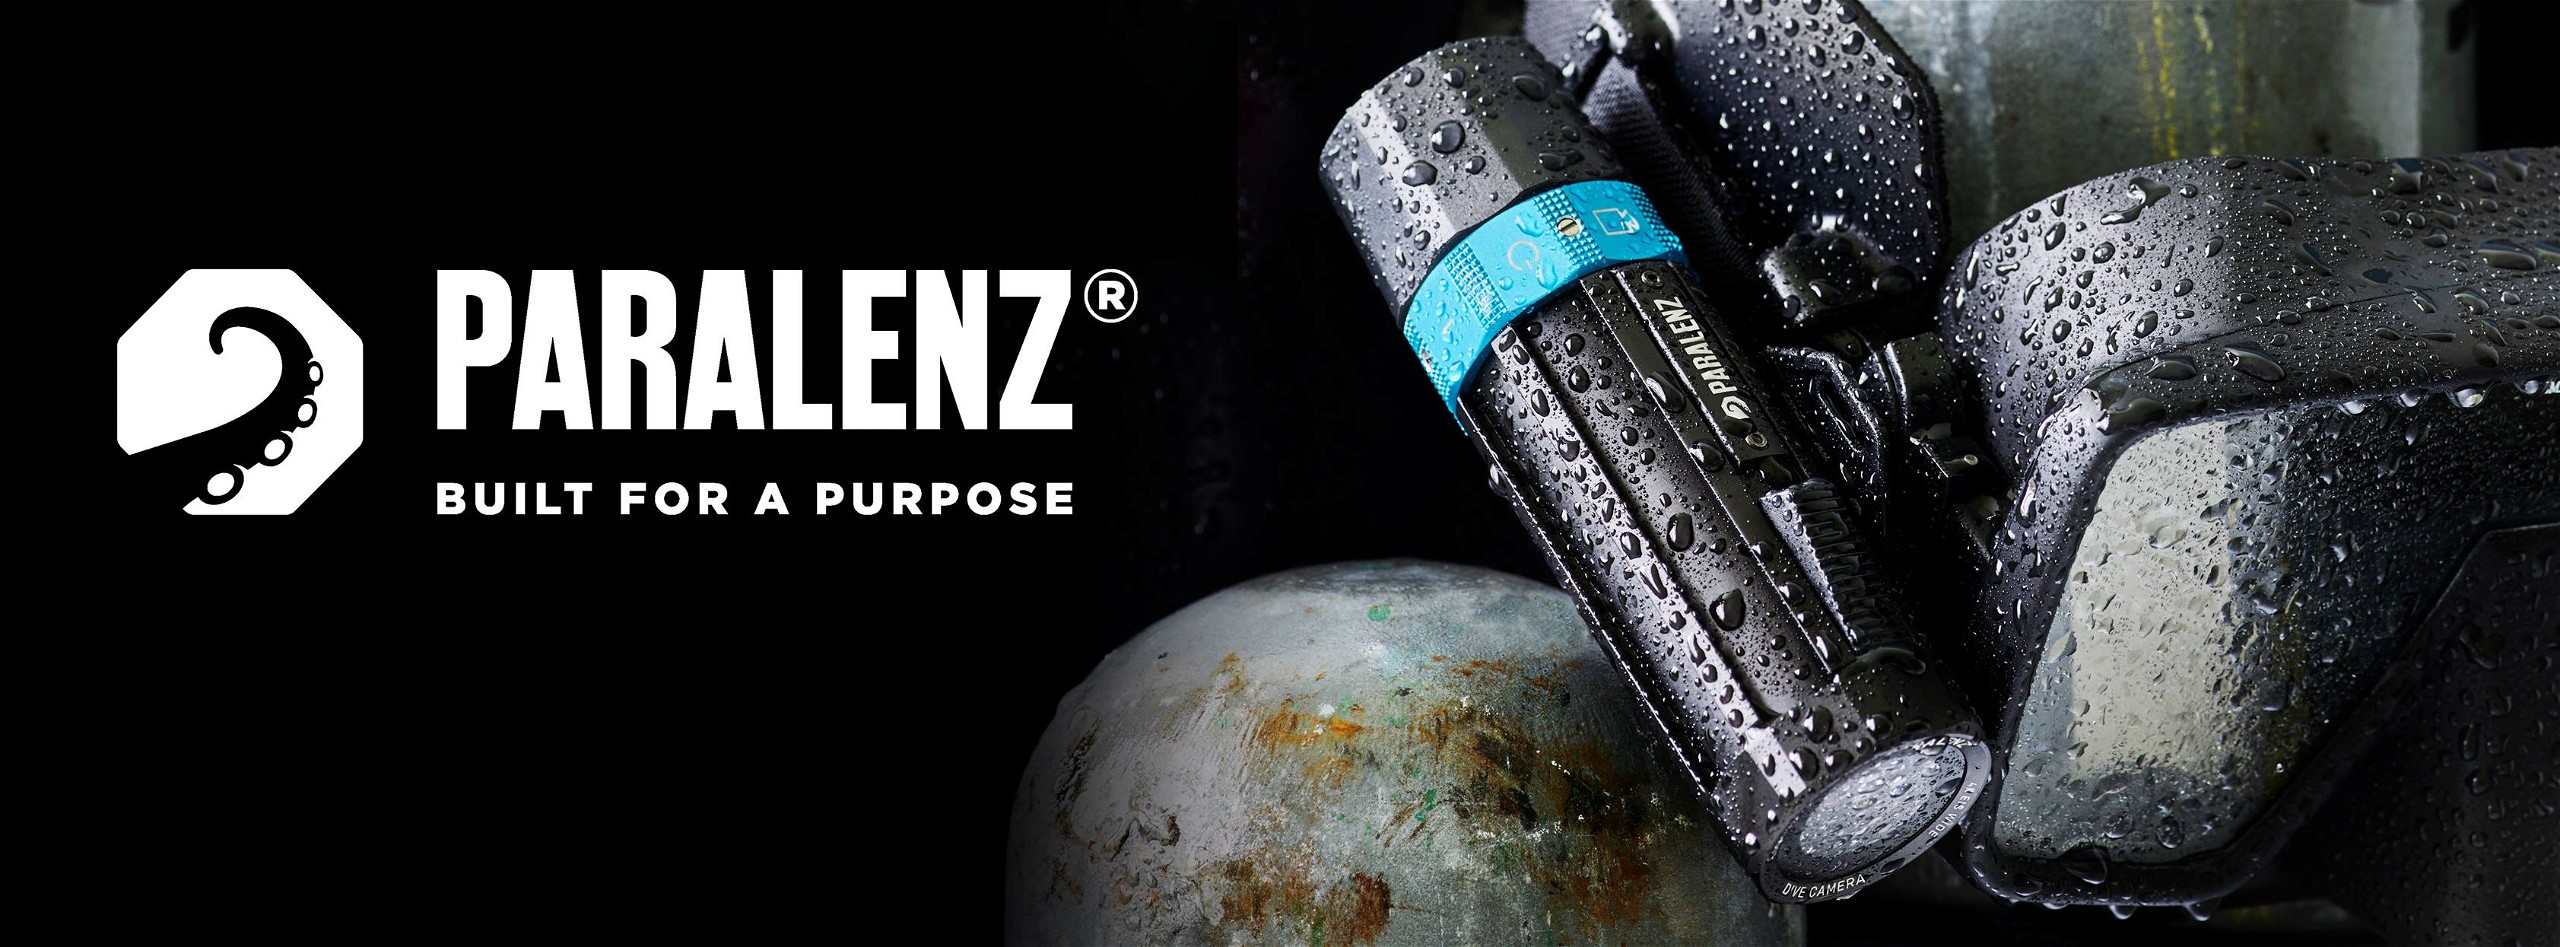 Paralenz - Built For A Purpose